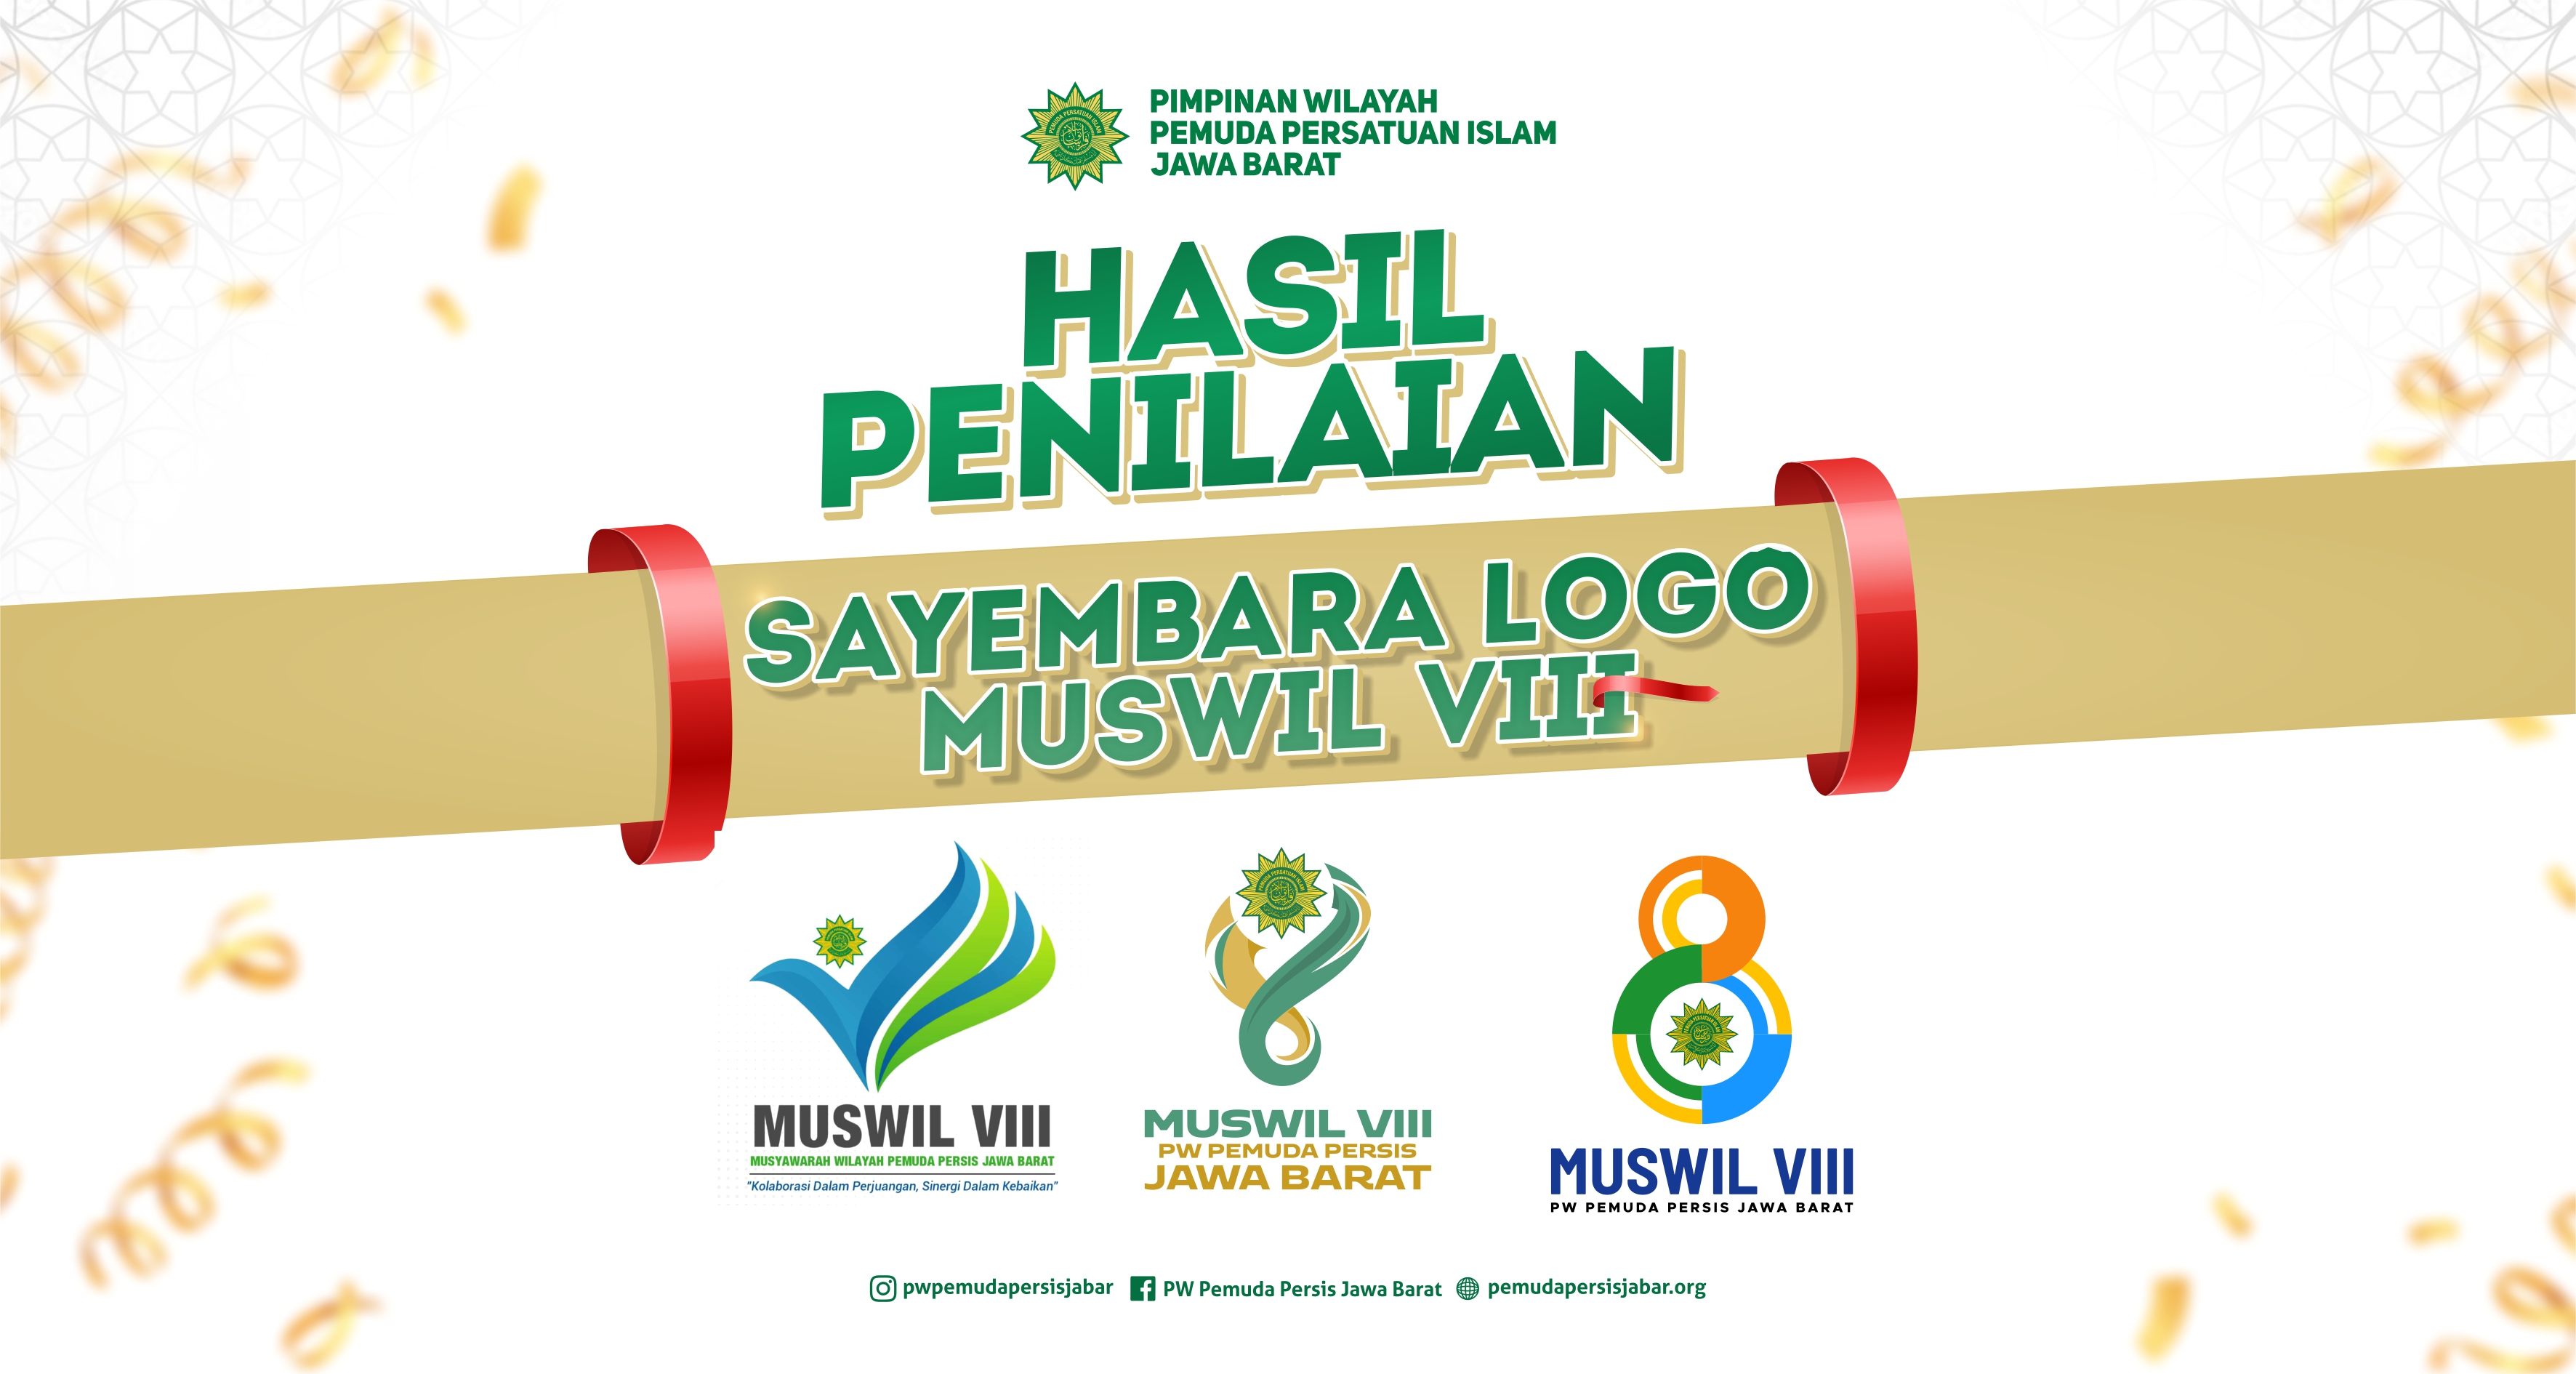 Sayembara Logo Usai Dilaksanakan, PW. Pemuda Persis Jawa Barat Resmi tetapkan Logo Muswil VIII